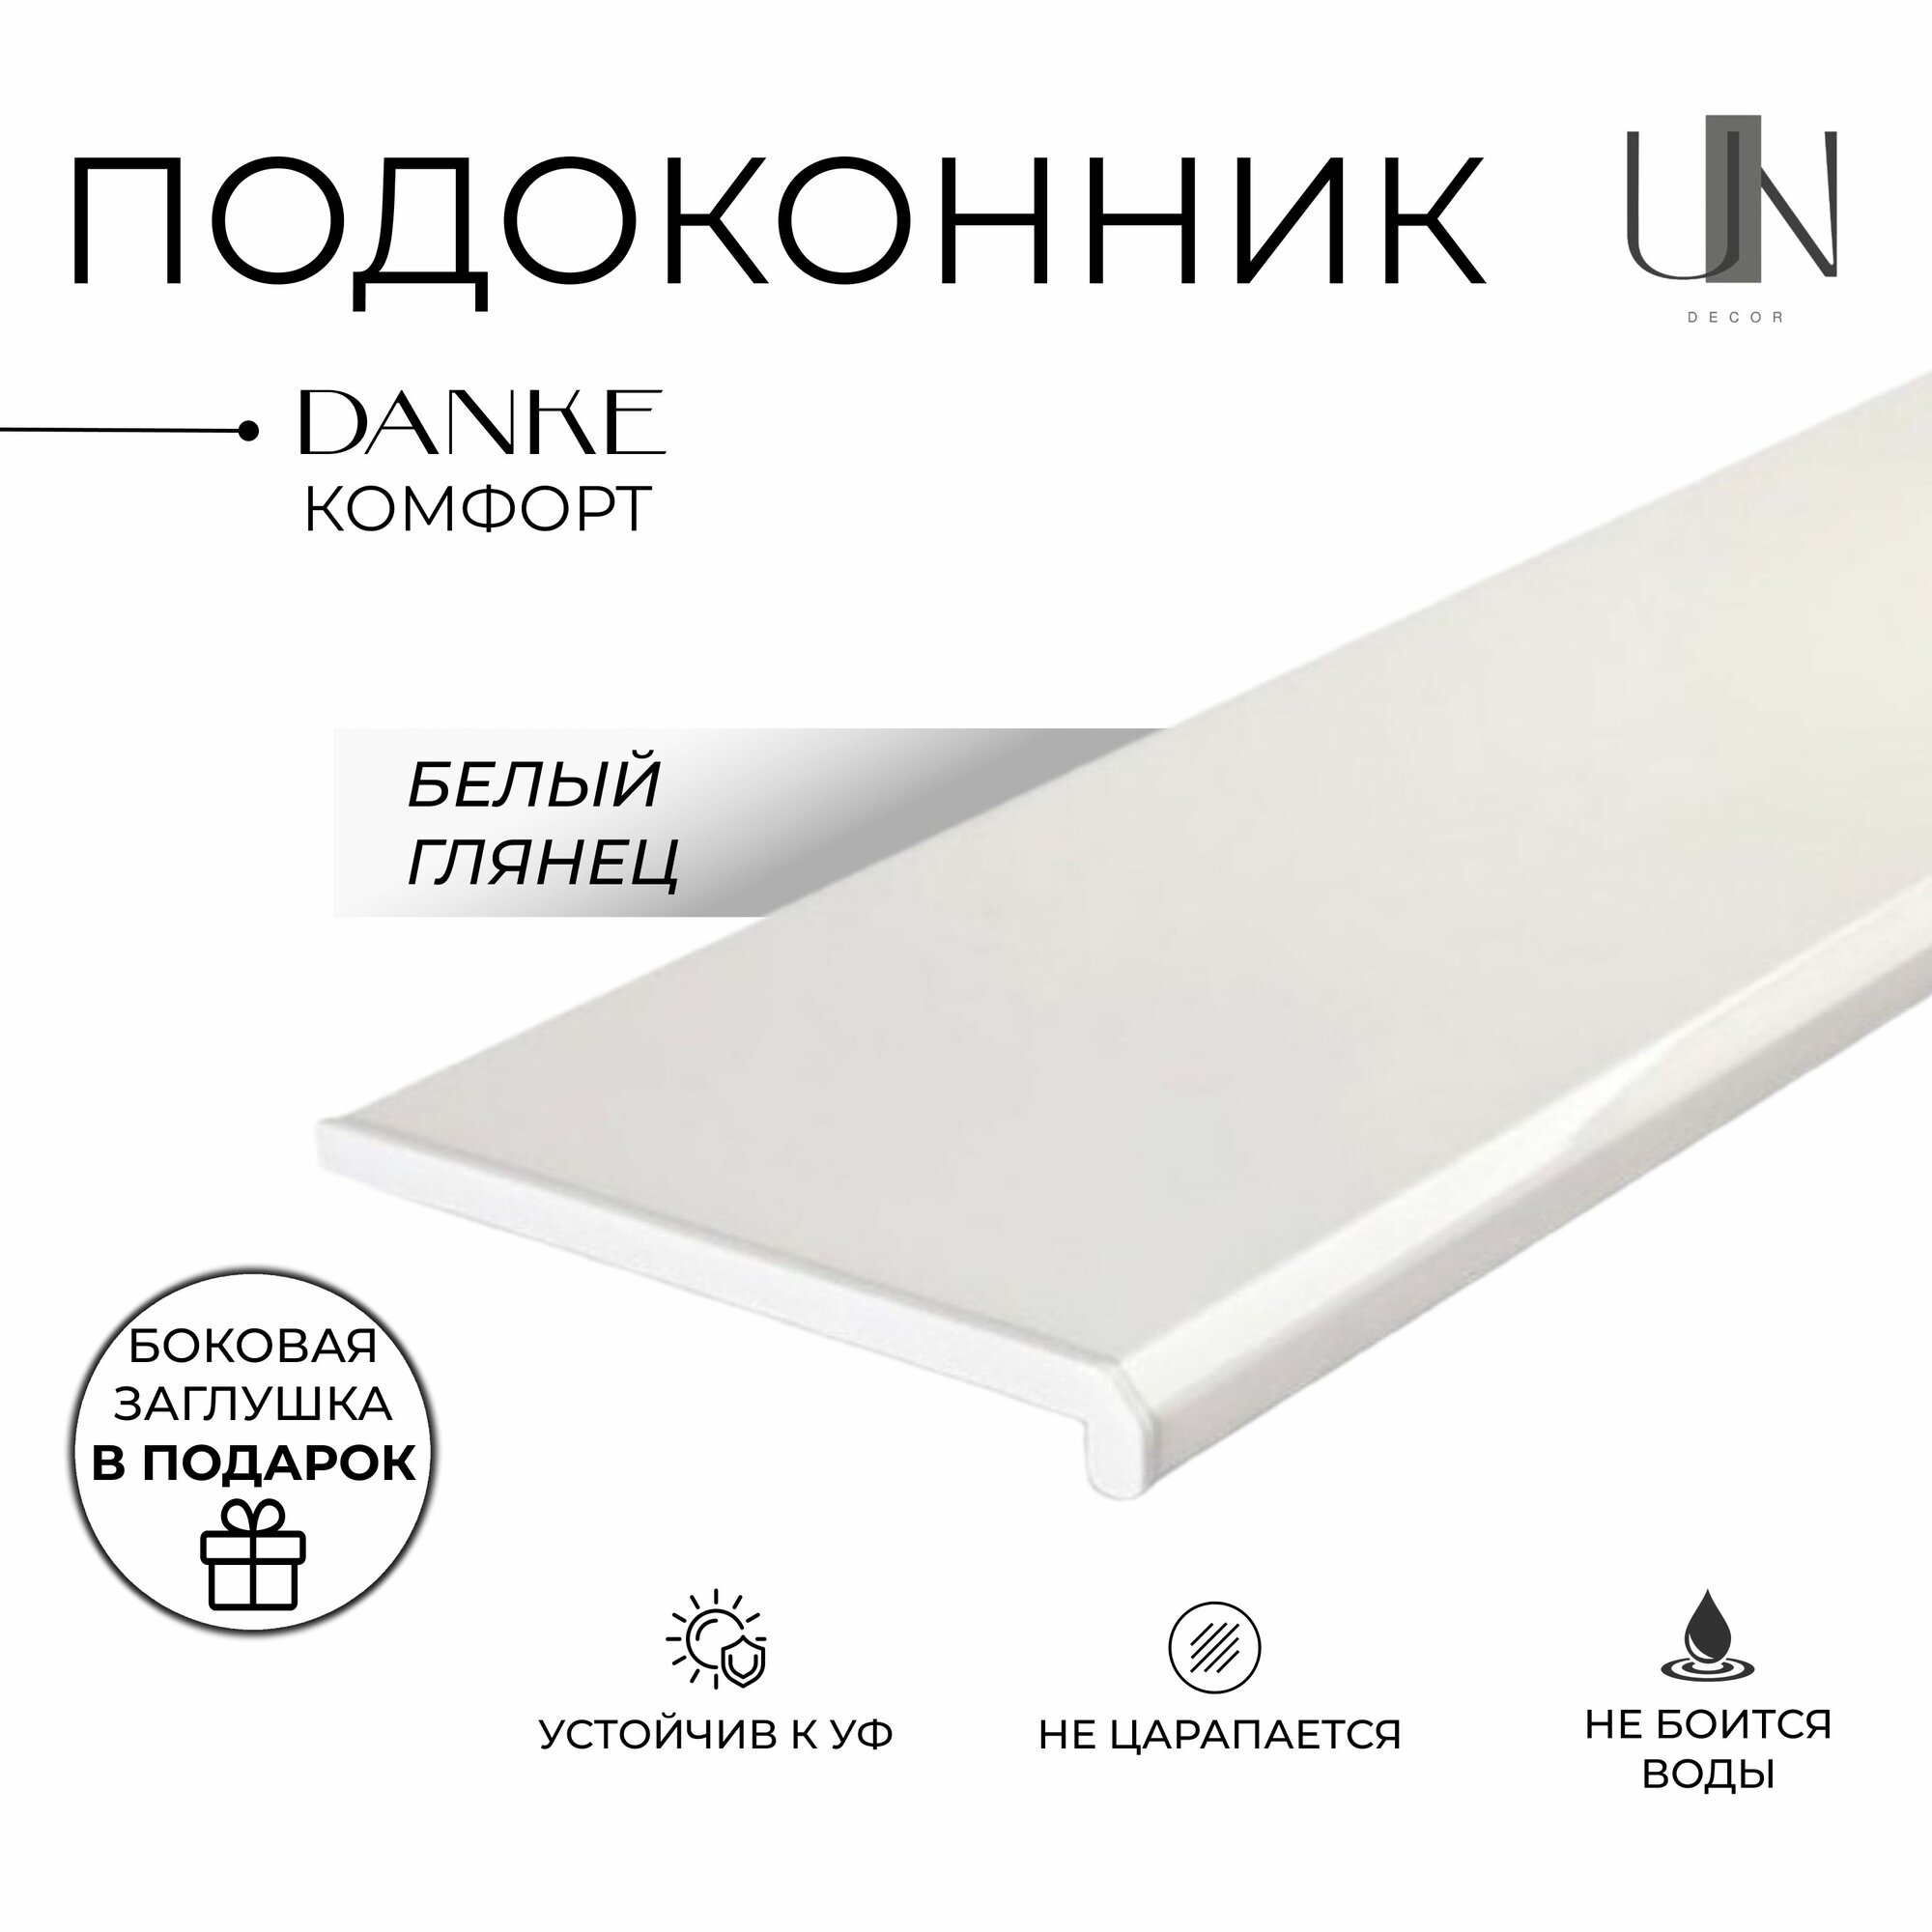 Подоконник Данке Белый глянцевый, коллекция DANKE KOMFORT 25 см х 0,8 м. пог.(250мм*800мм)